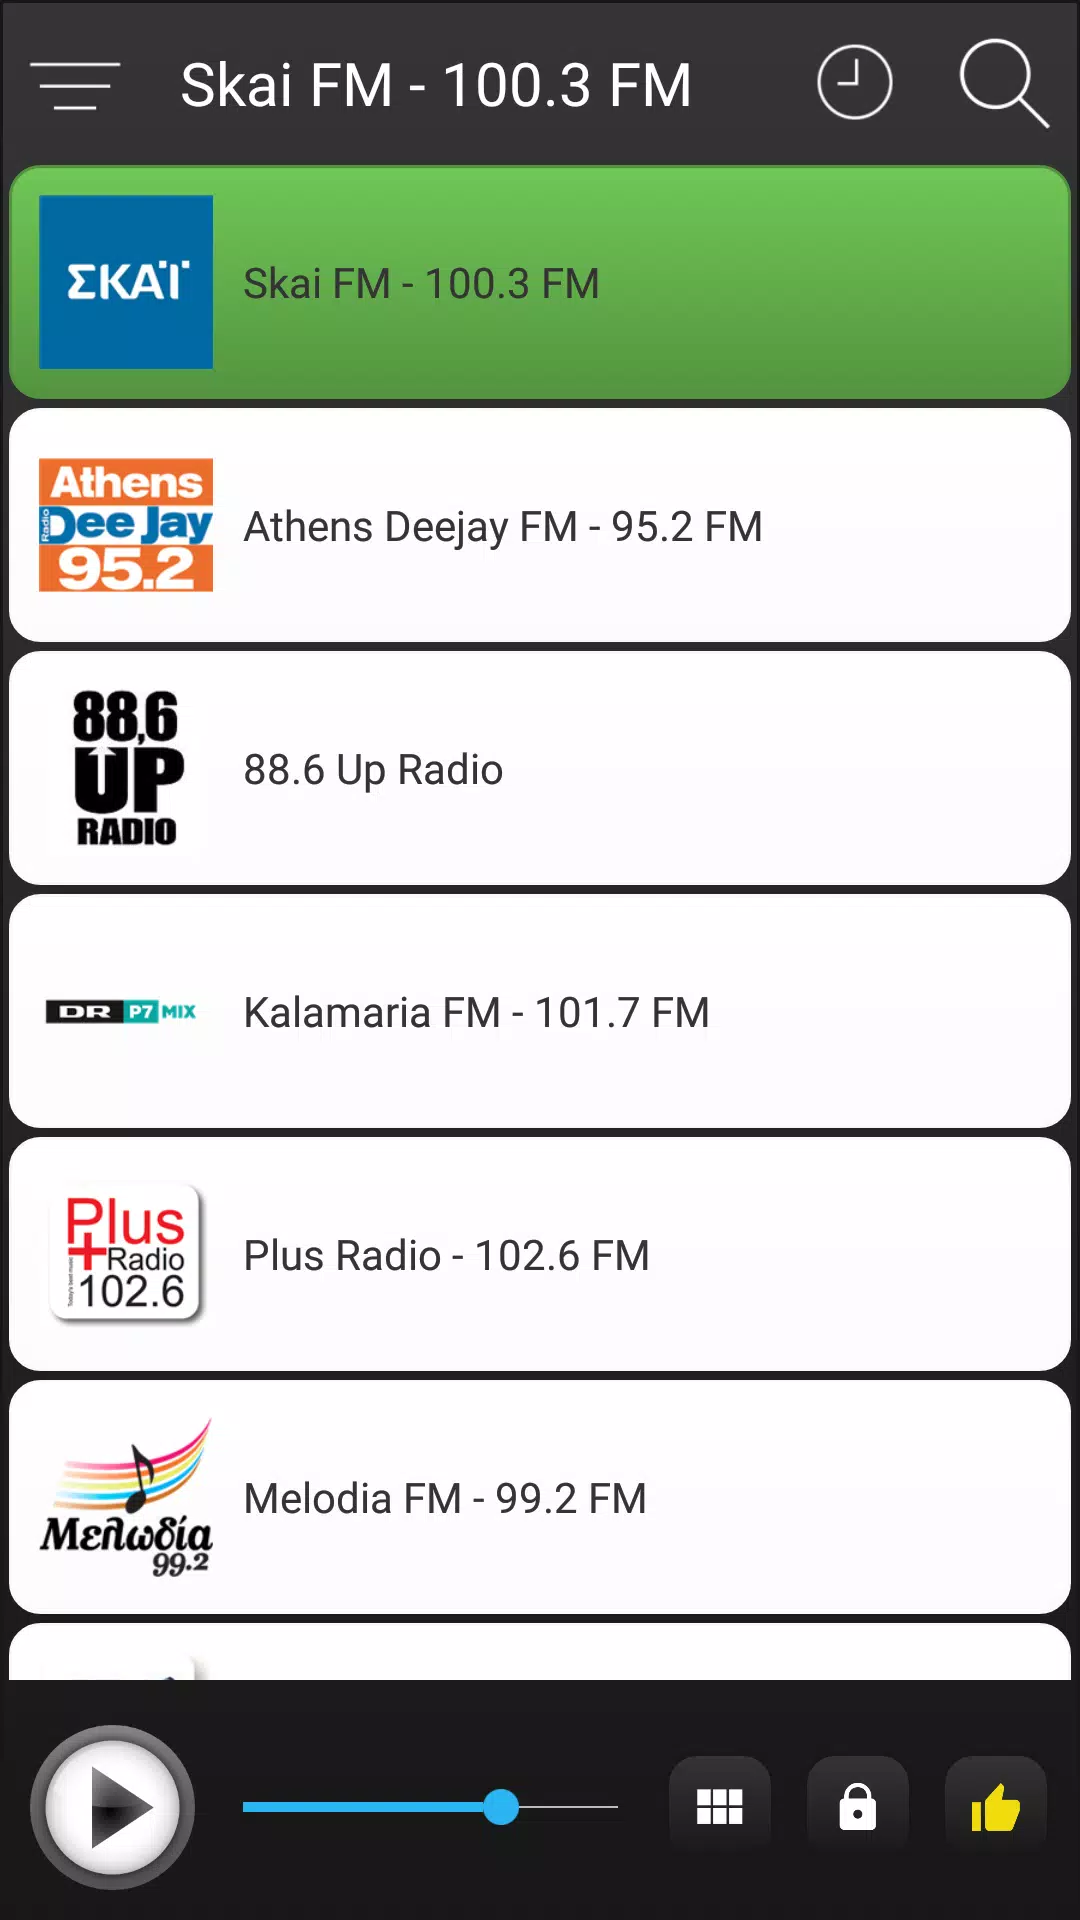 Greek Radio FM Live Online for Android - APK Download